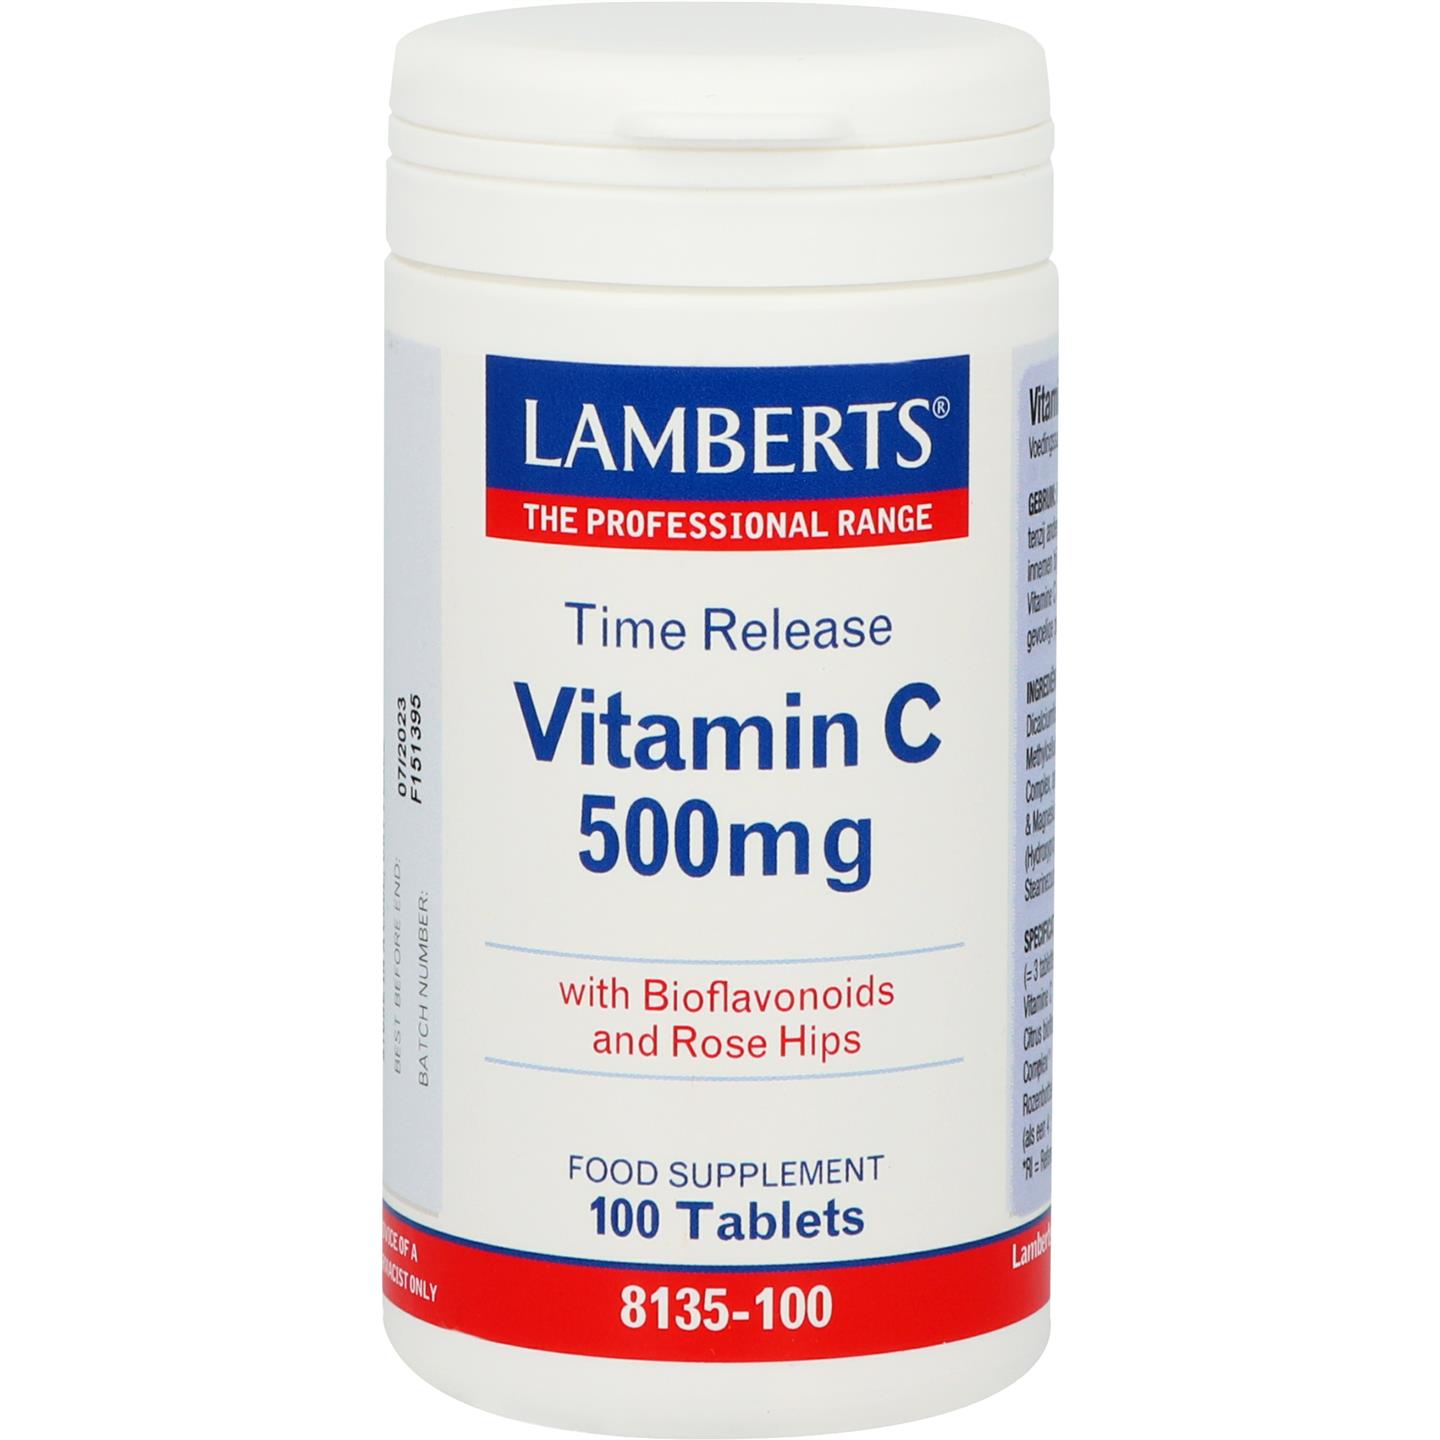 Vitamine C 500 mg Time Release